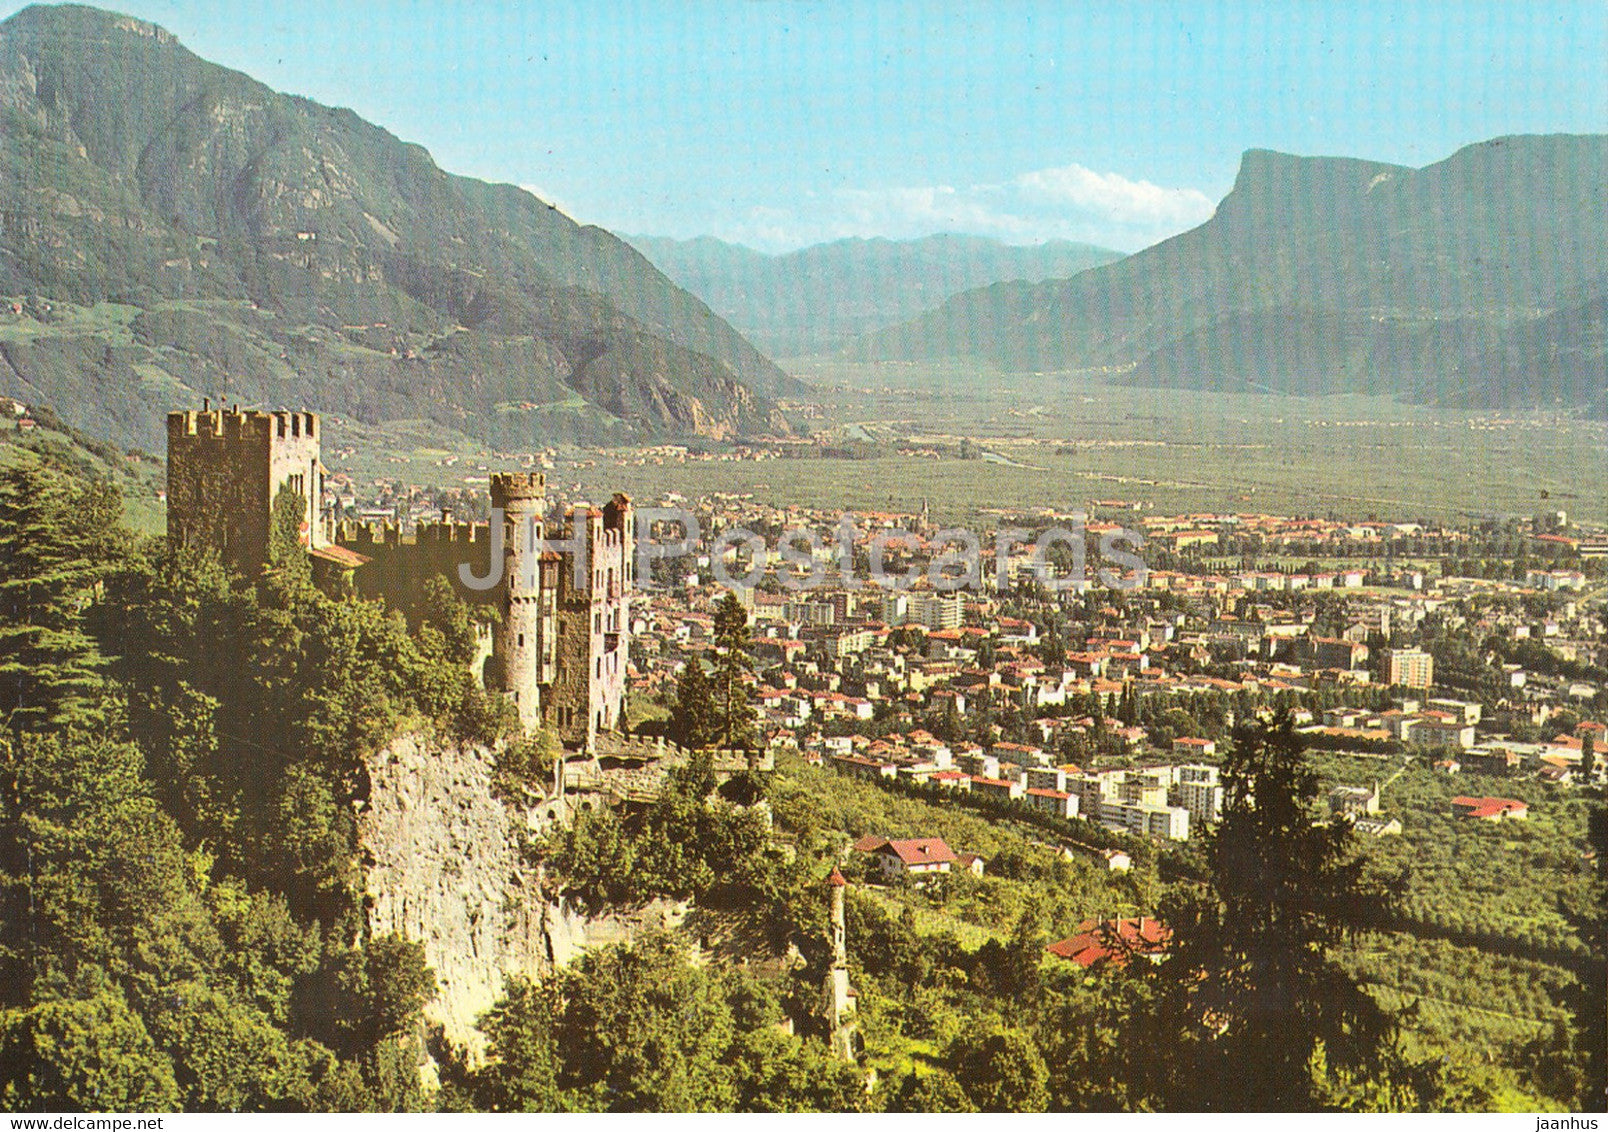 Merano 312 m - Castel Fontana - Meran - Brunnenburg - Italy - unused - JH Postcards